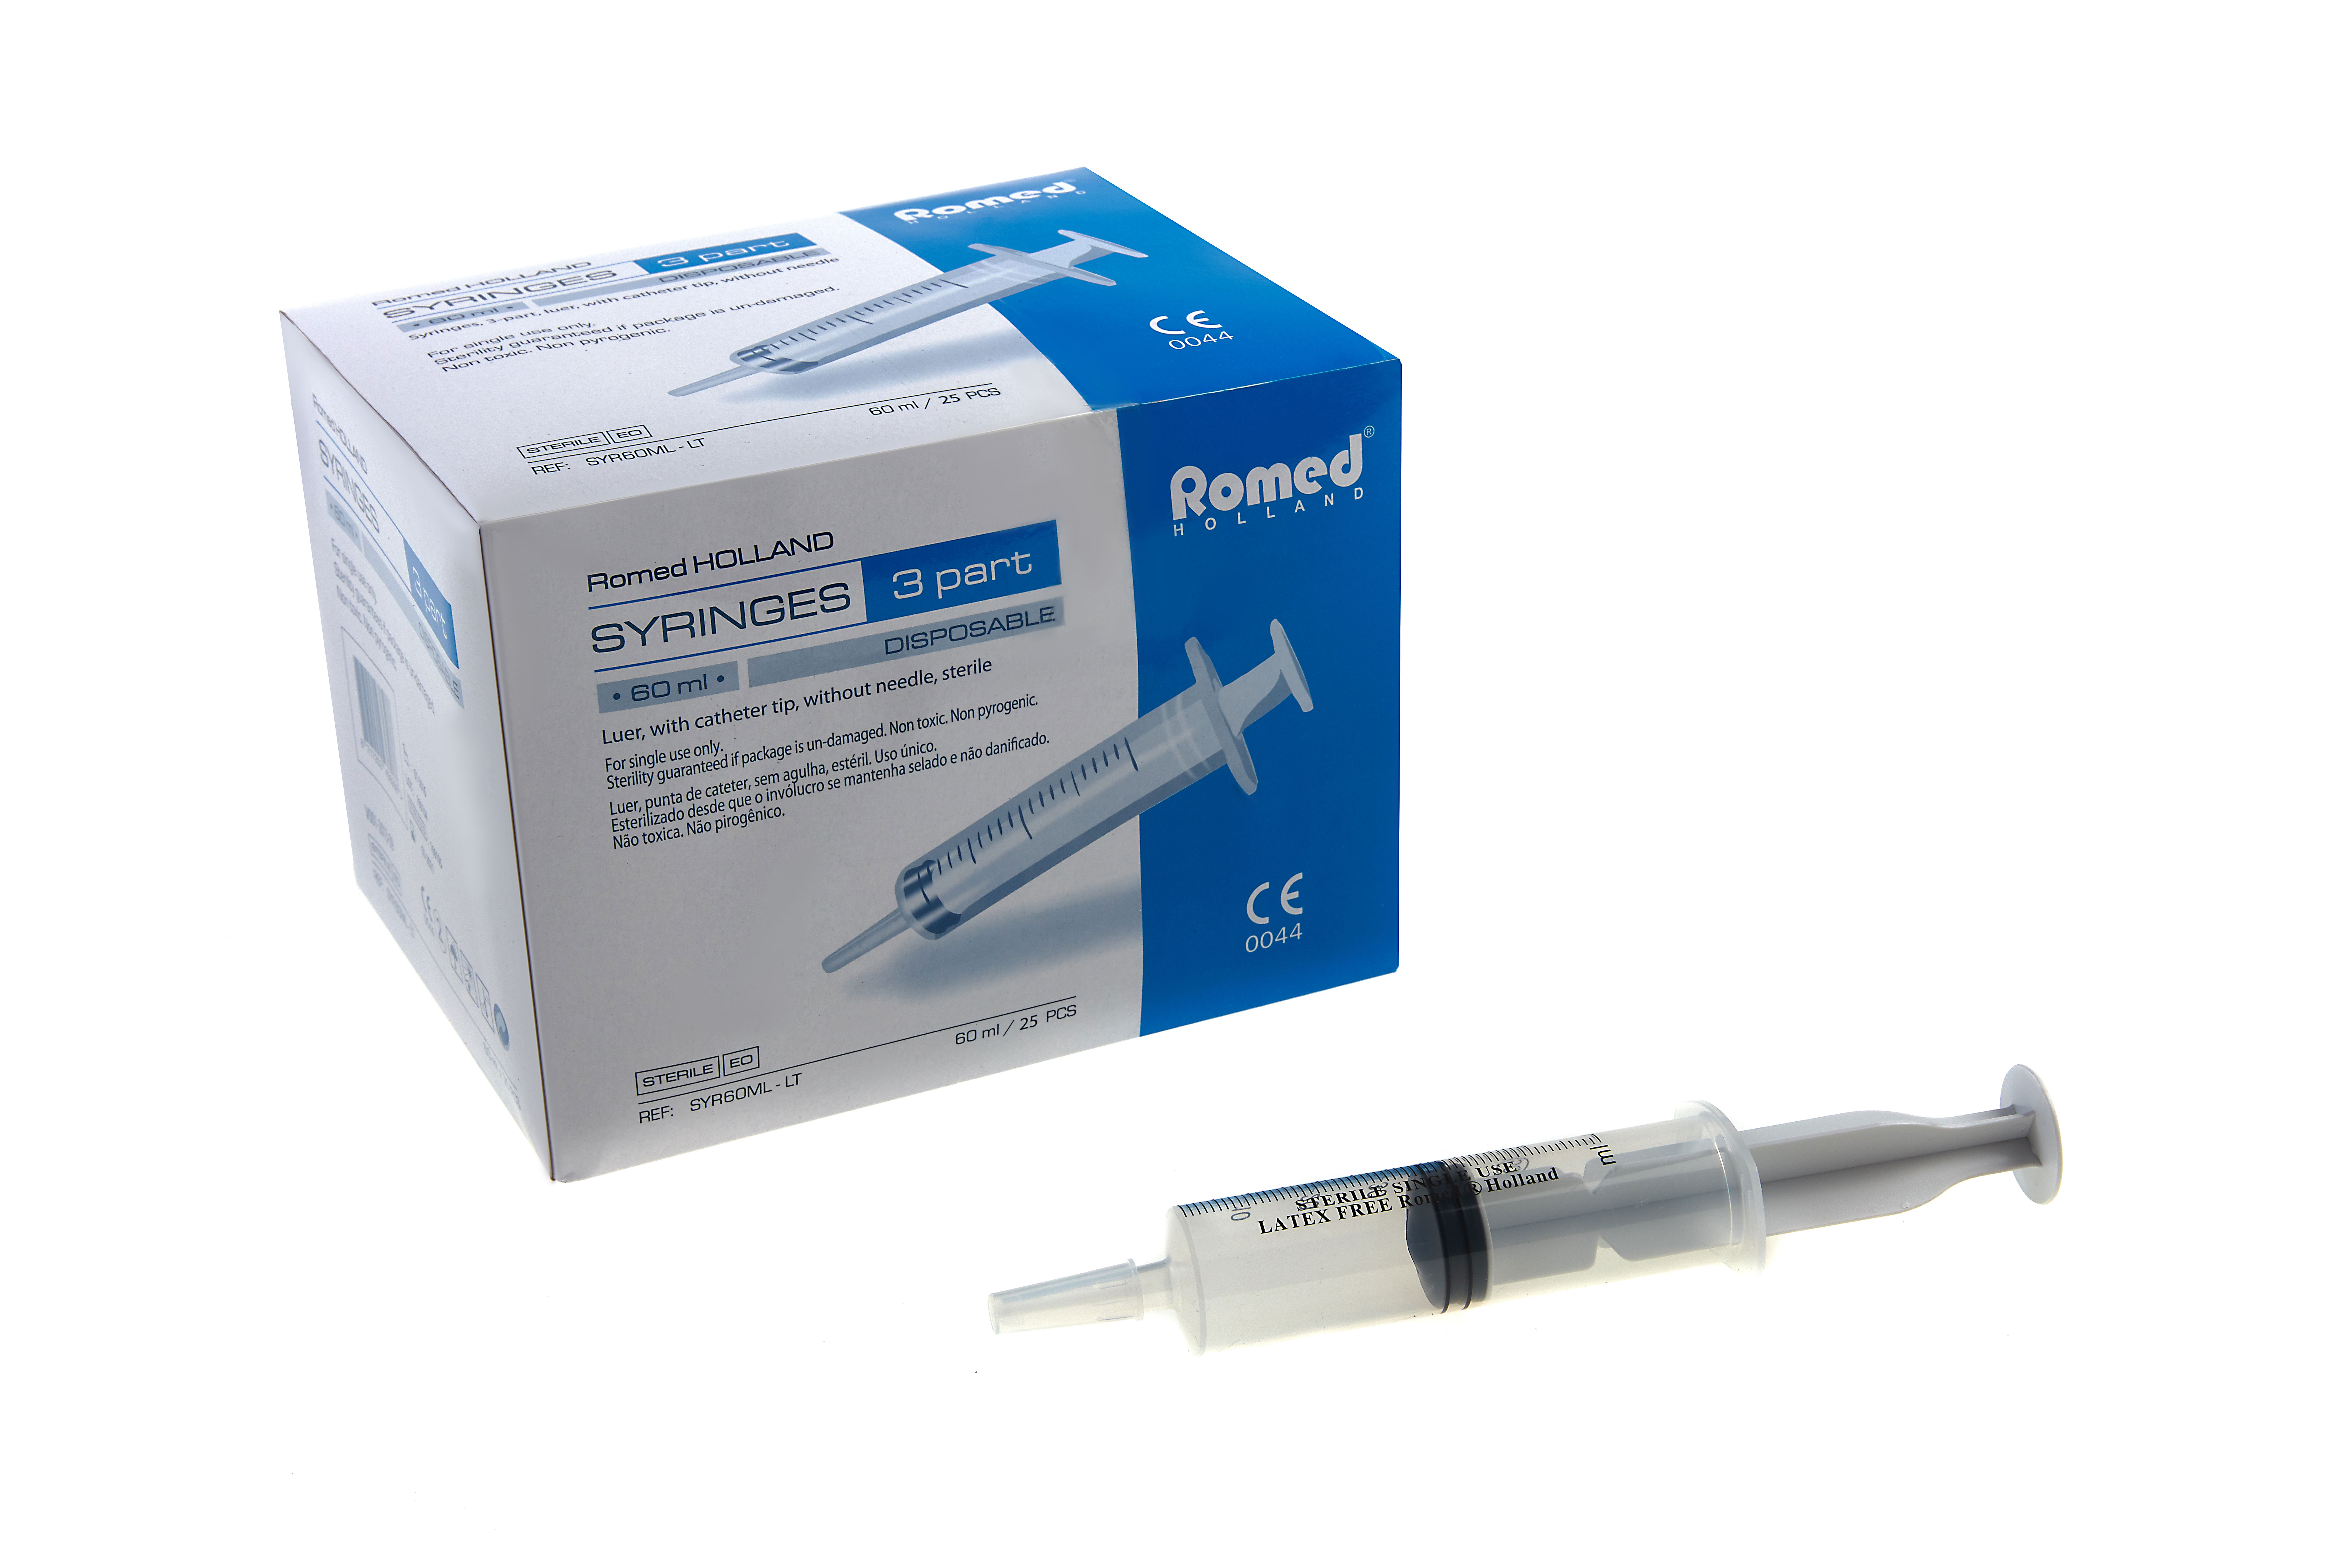 SYR60ML-LT Romed 3-part syringes 60ml, catheter tip, sterile per piece, 25 pcs in an inner box, 16 x 25 pcs = 400 pcs in a carton.